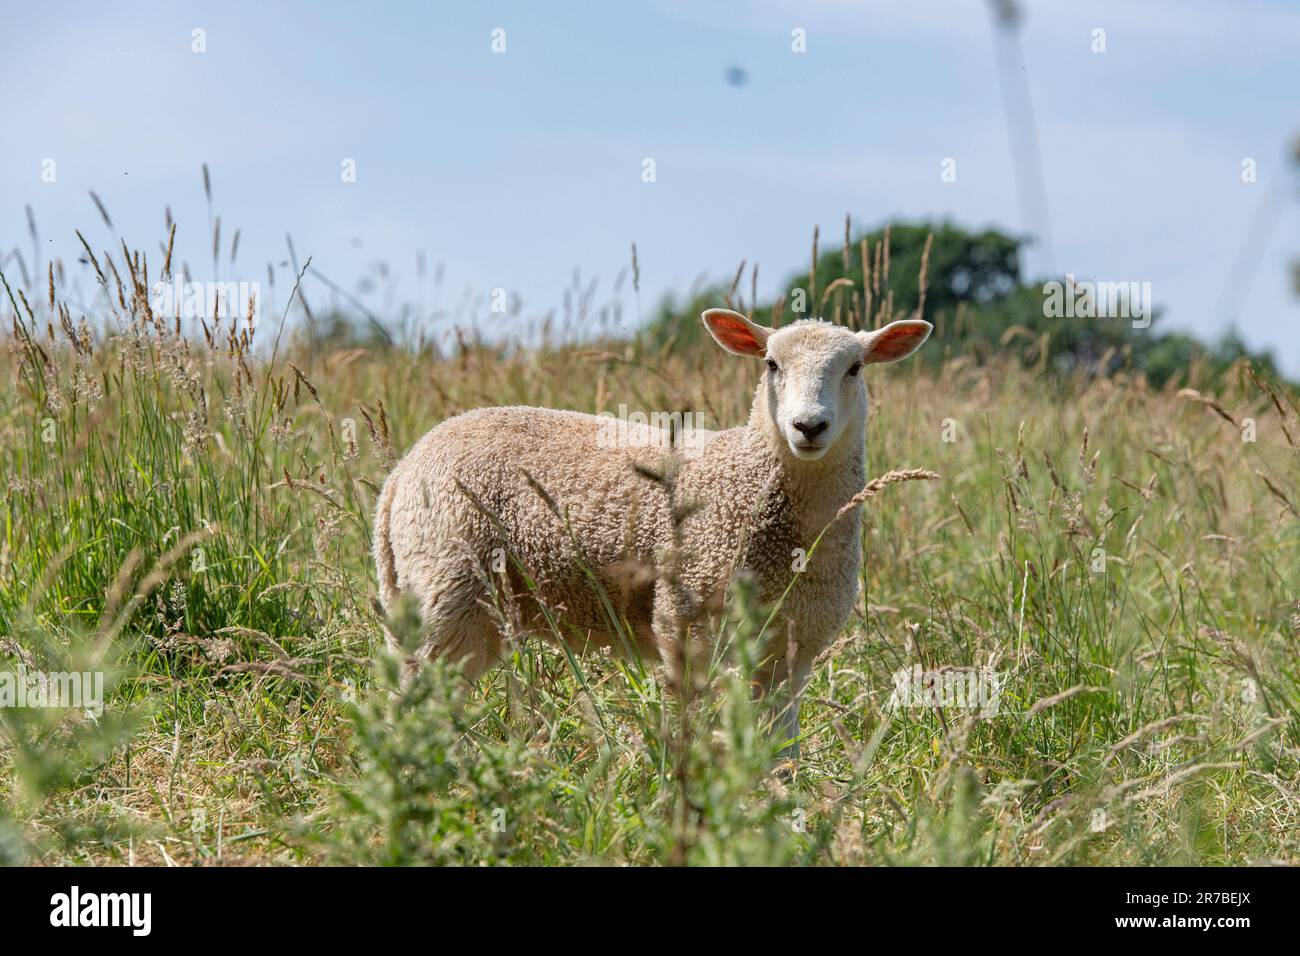 lamb in long grass Stock Photo